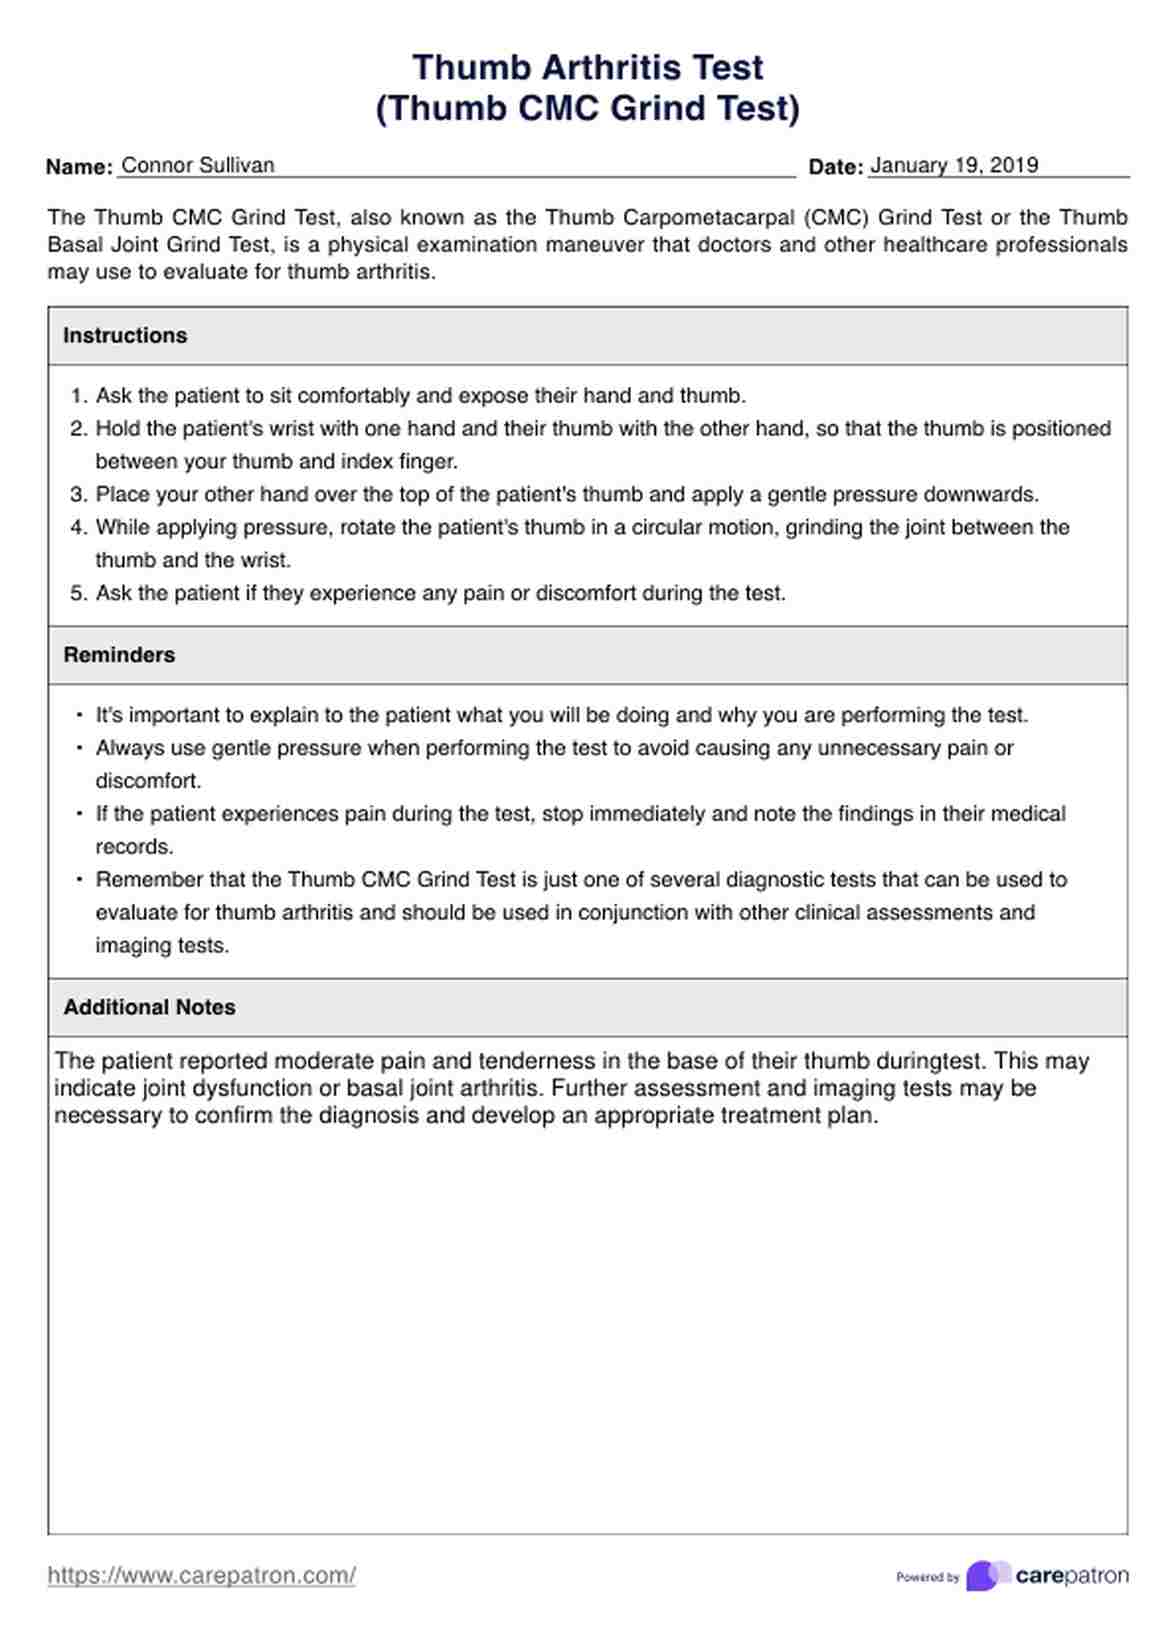 Thumb Arthritis Test PDF Example